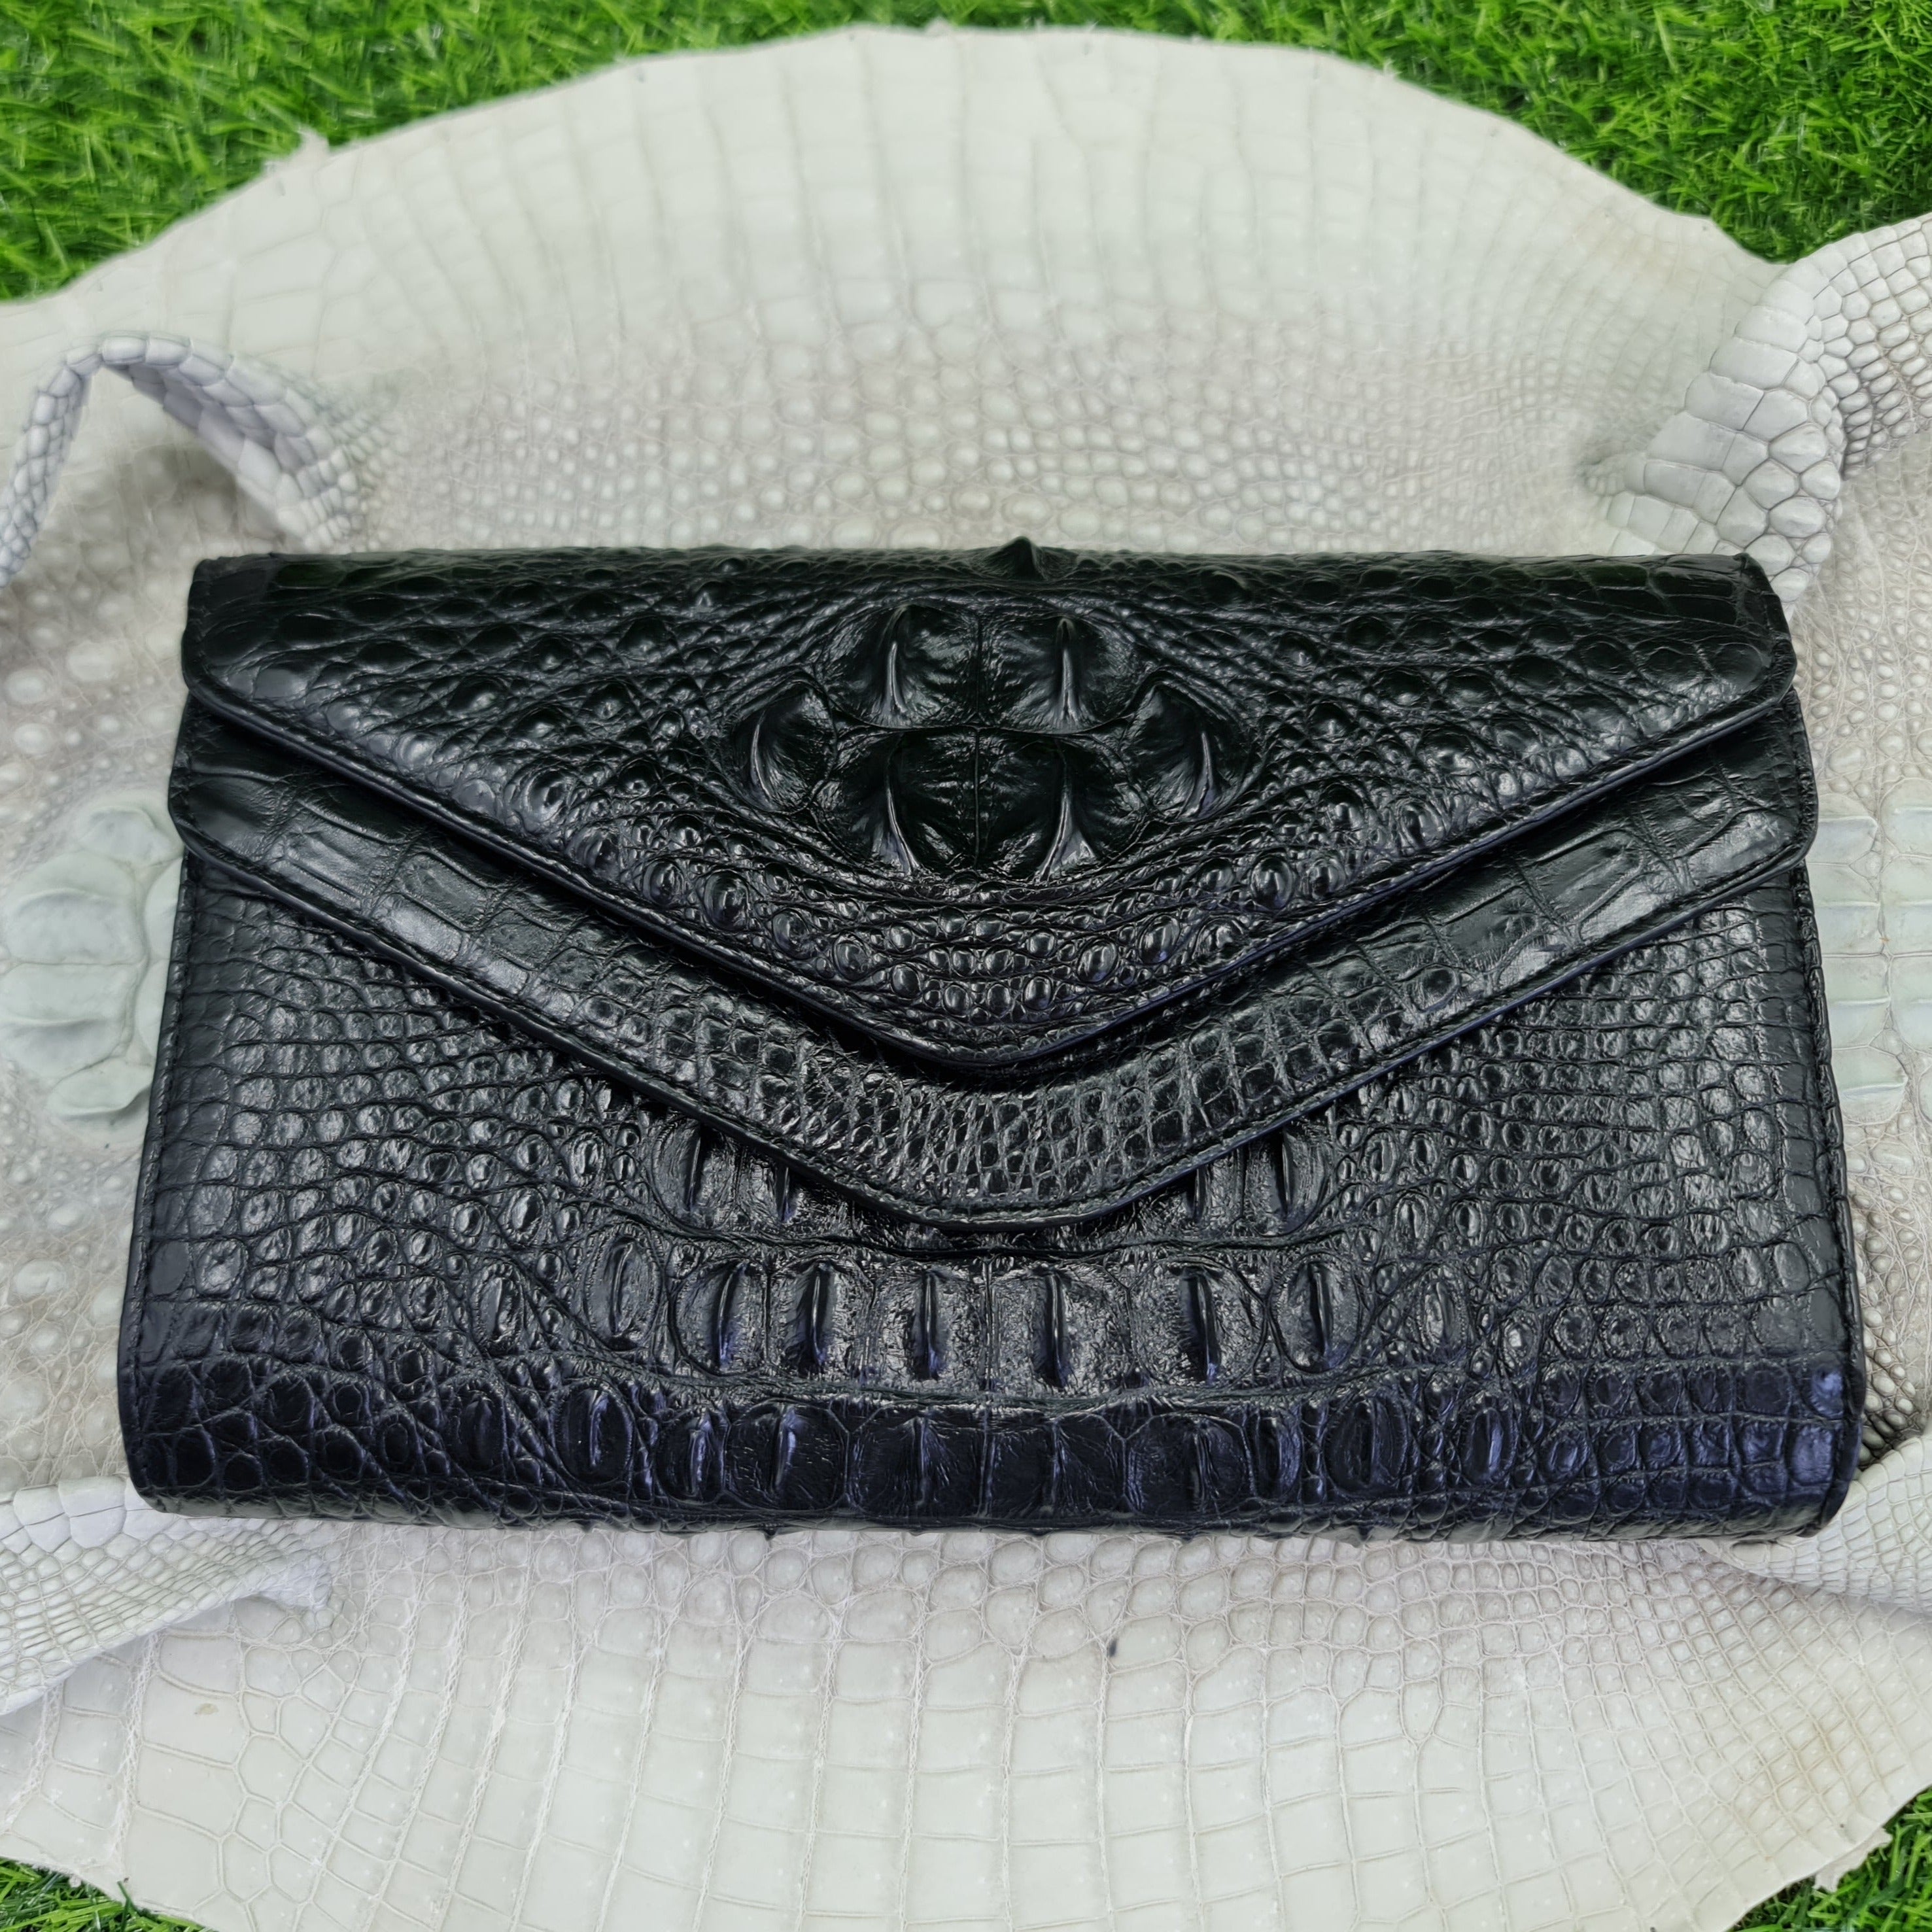 Womens Leather Alligator Handbag Handmade Luxury Leather Bag - Work Bag Women - Black Leather Satchel Purse XACH-12 - Vinacreations